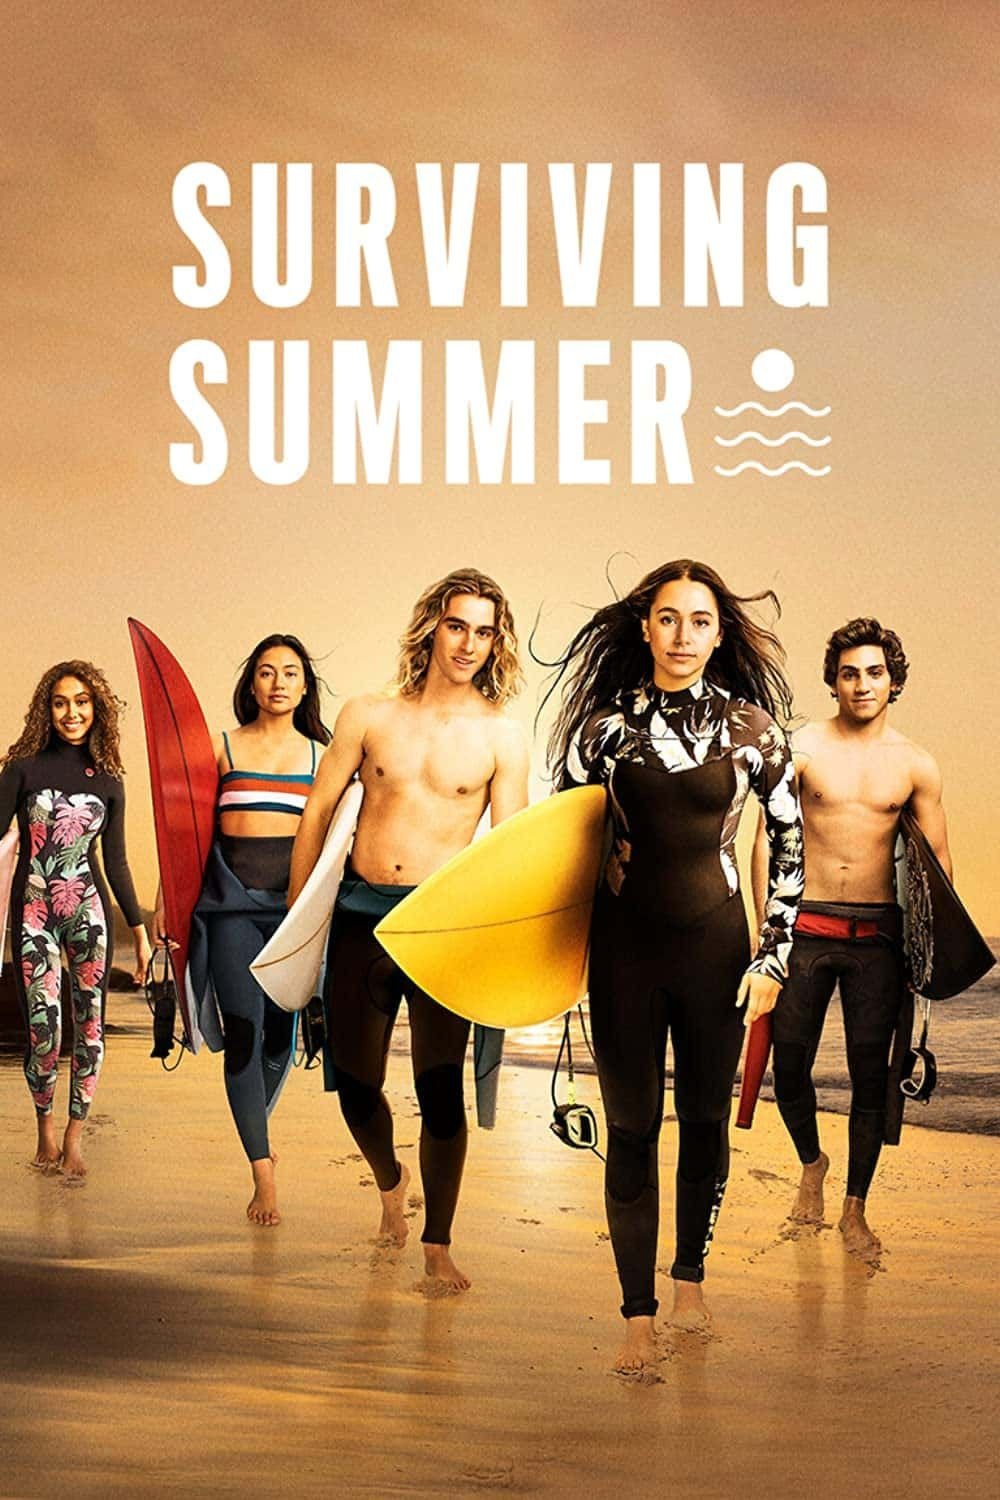 Surviving Summer Season 2